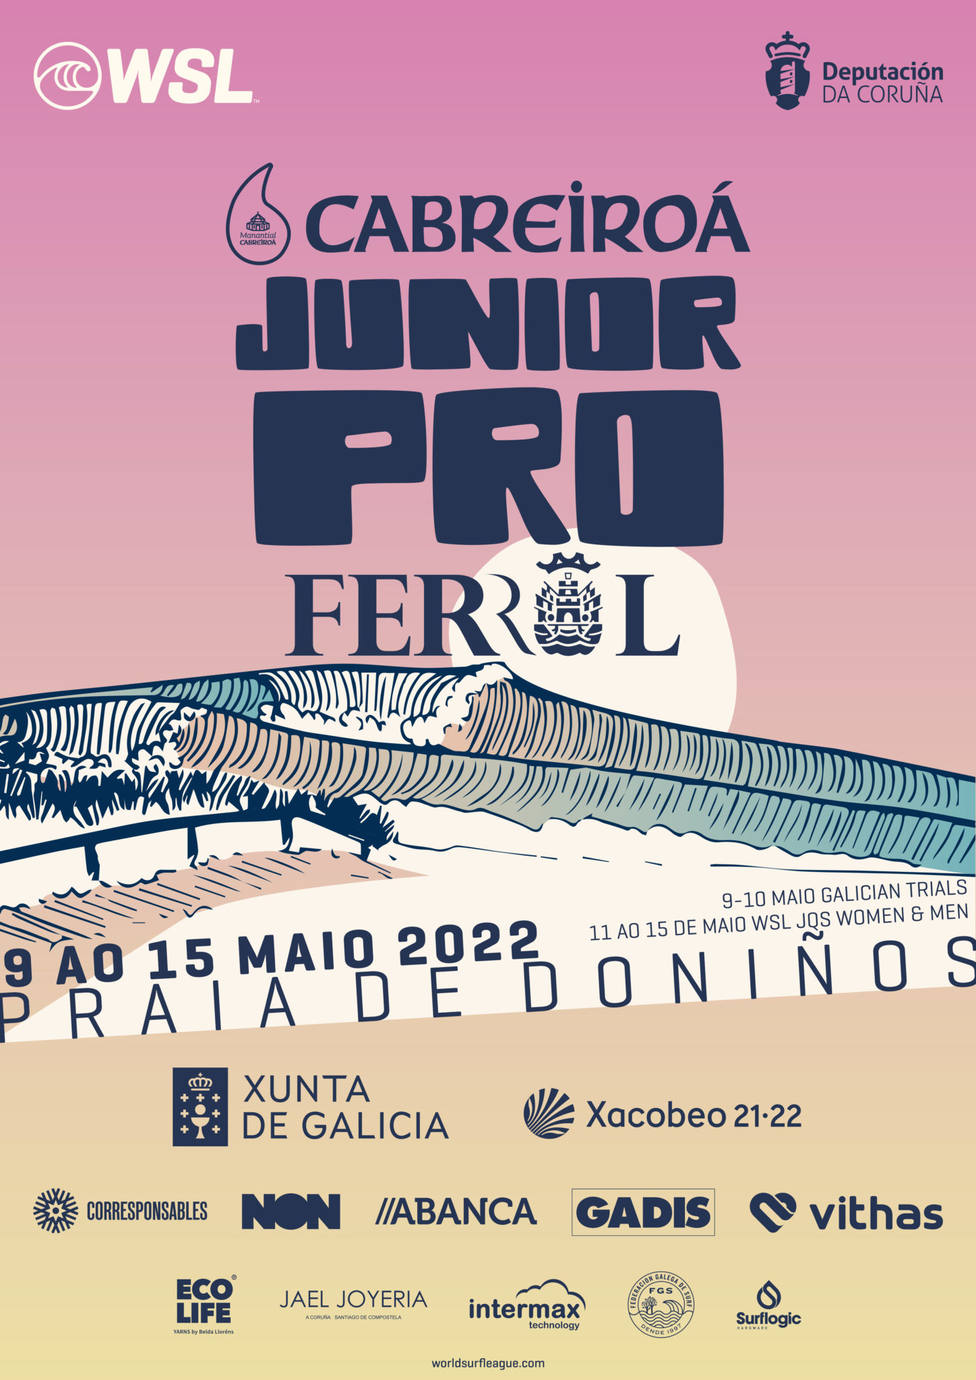 Poster Cabreiroa junior pro Ferrol 2022